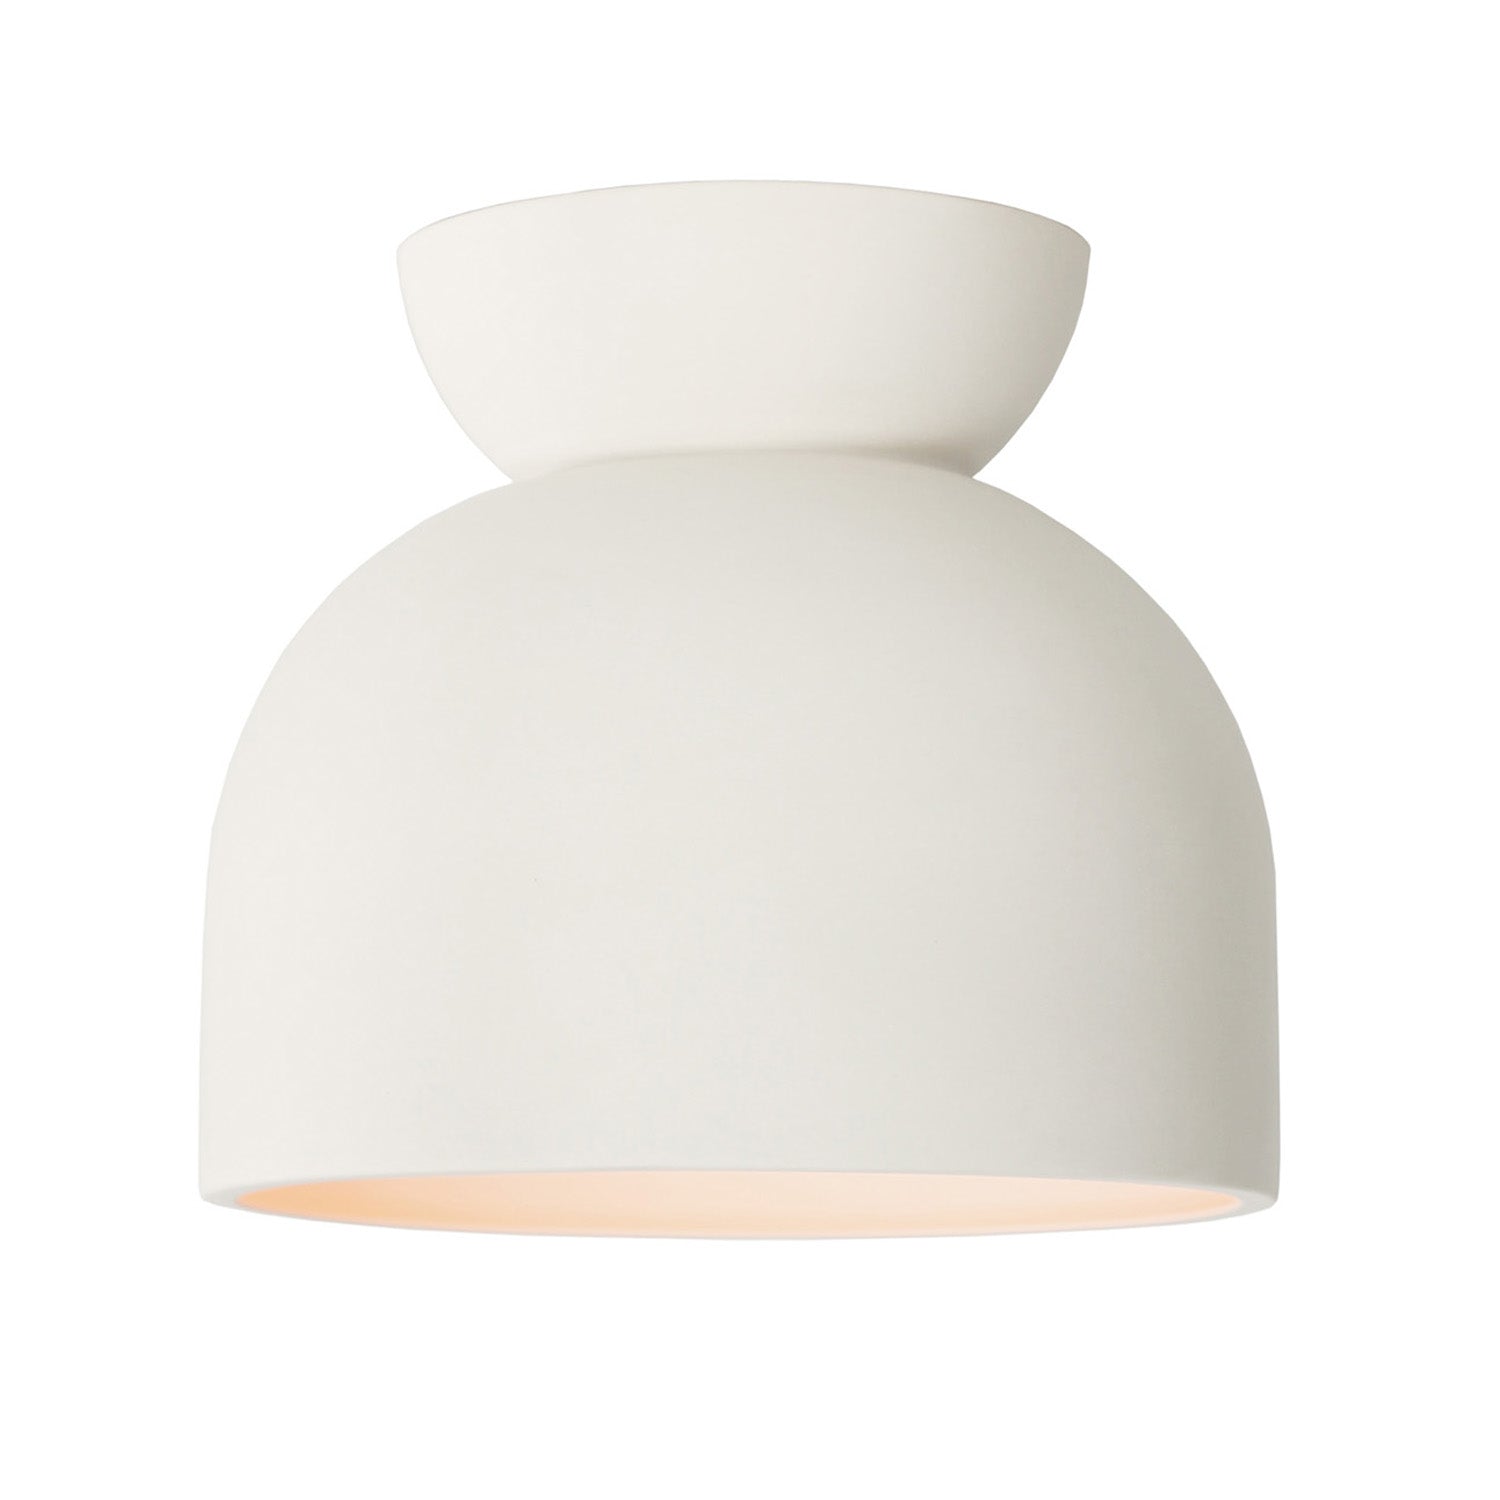 Tumwater Ceramic Table Lamp by Cedar & Moss